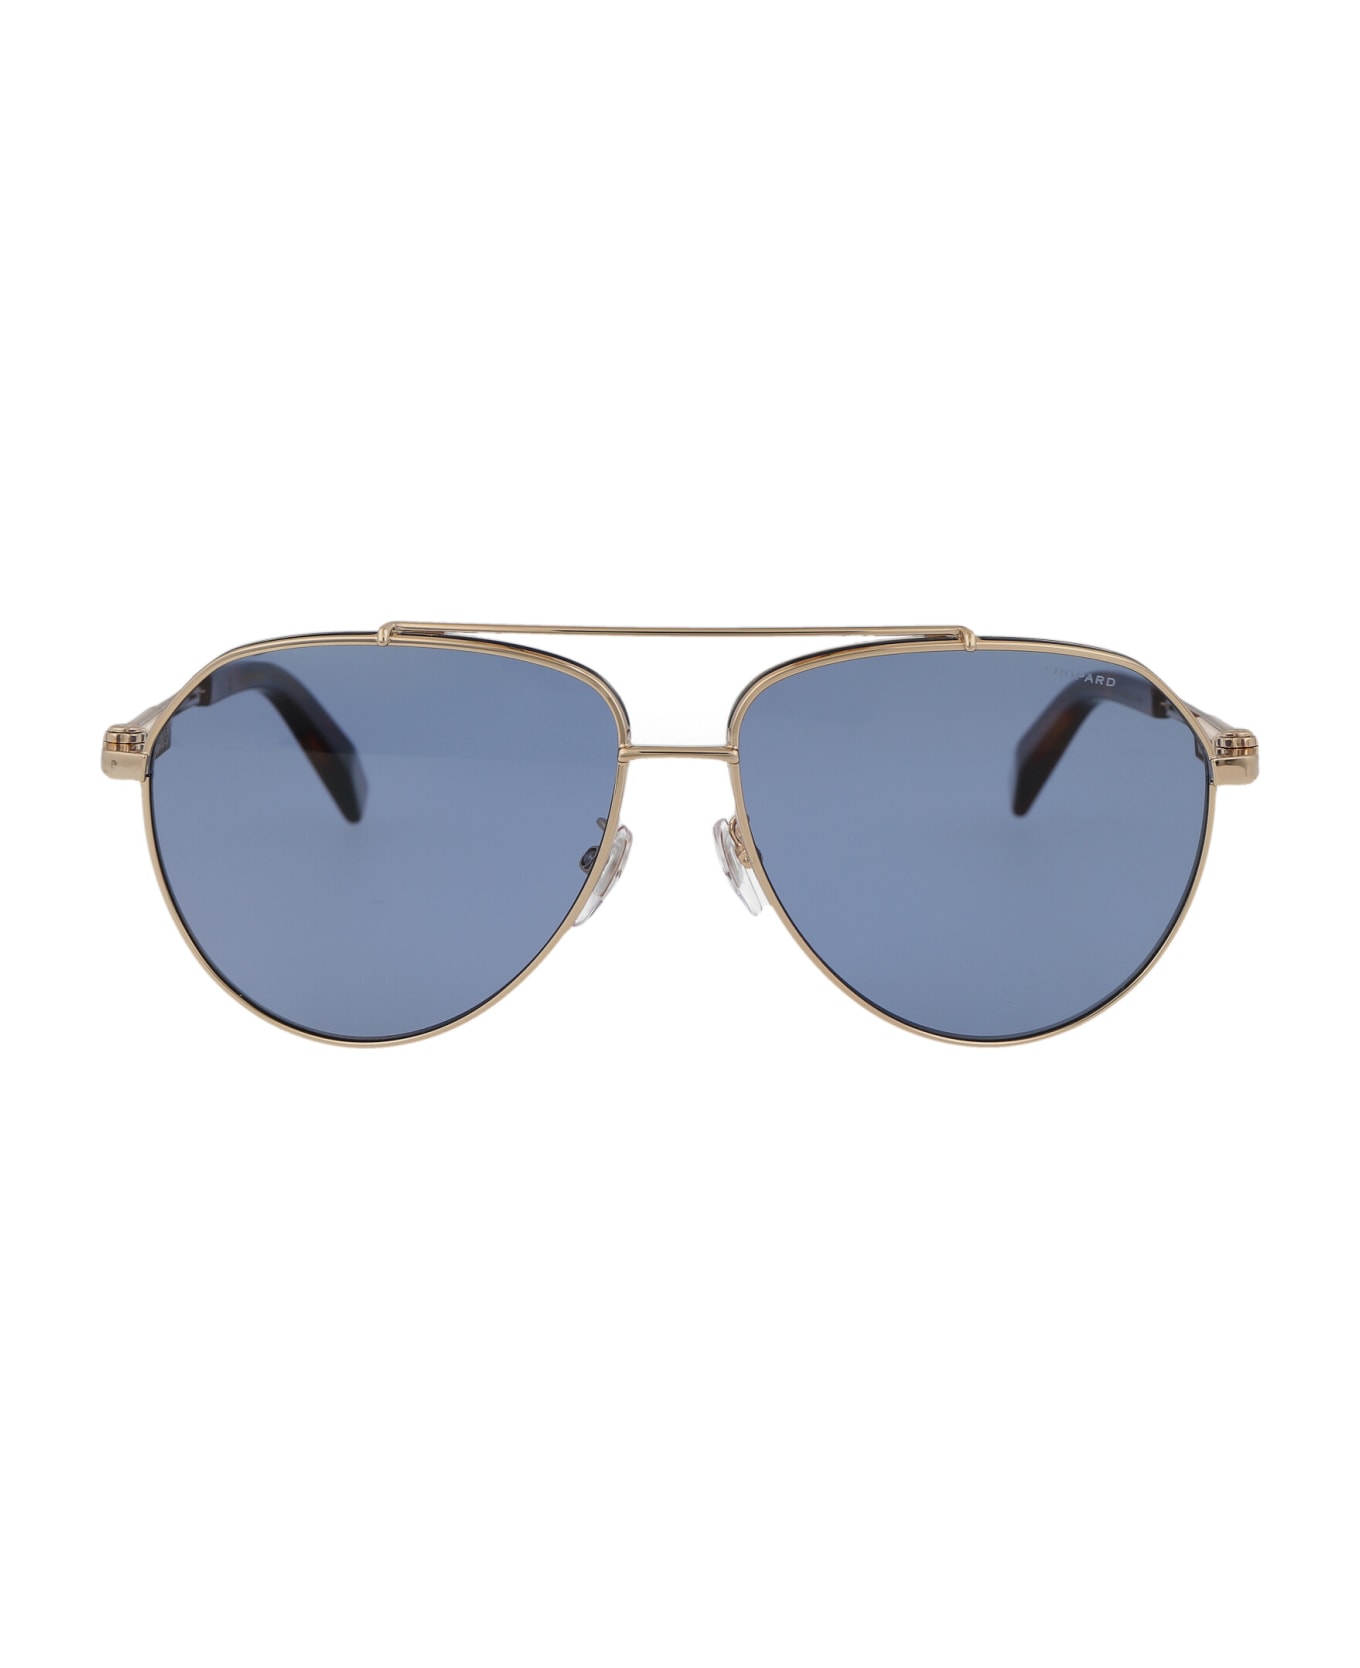 Chopard Schg63 Sunglasses - 300P GOLD サングラス